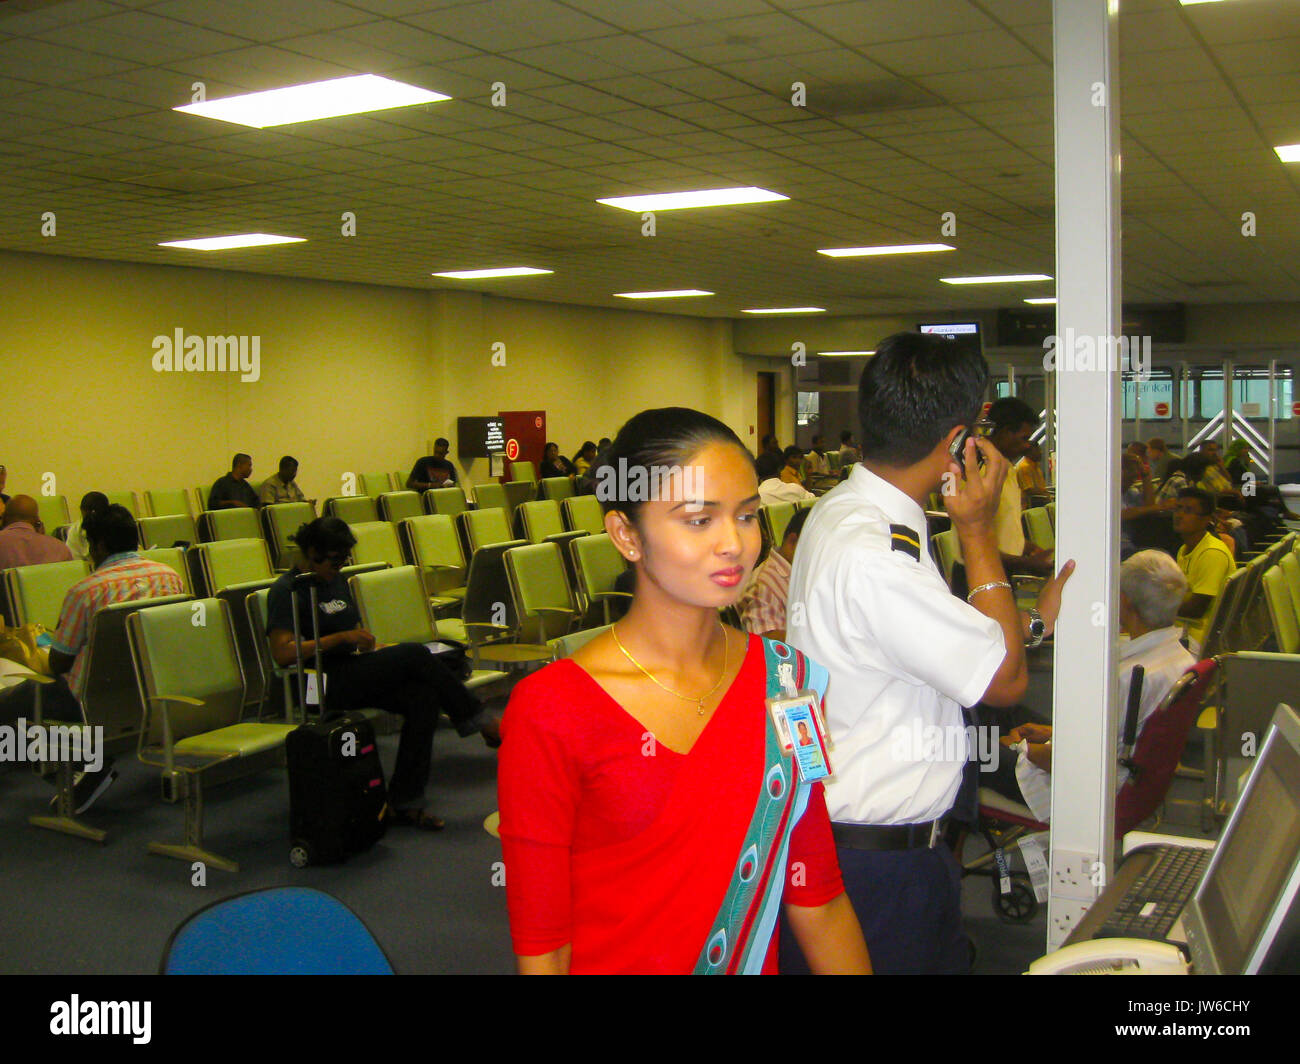 Colombo, Sri Lanka - May 05, 2009: The Young beautiful flight attendant in the Transit area at Bandaranaike International Airport. Stock Photo